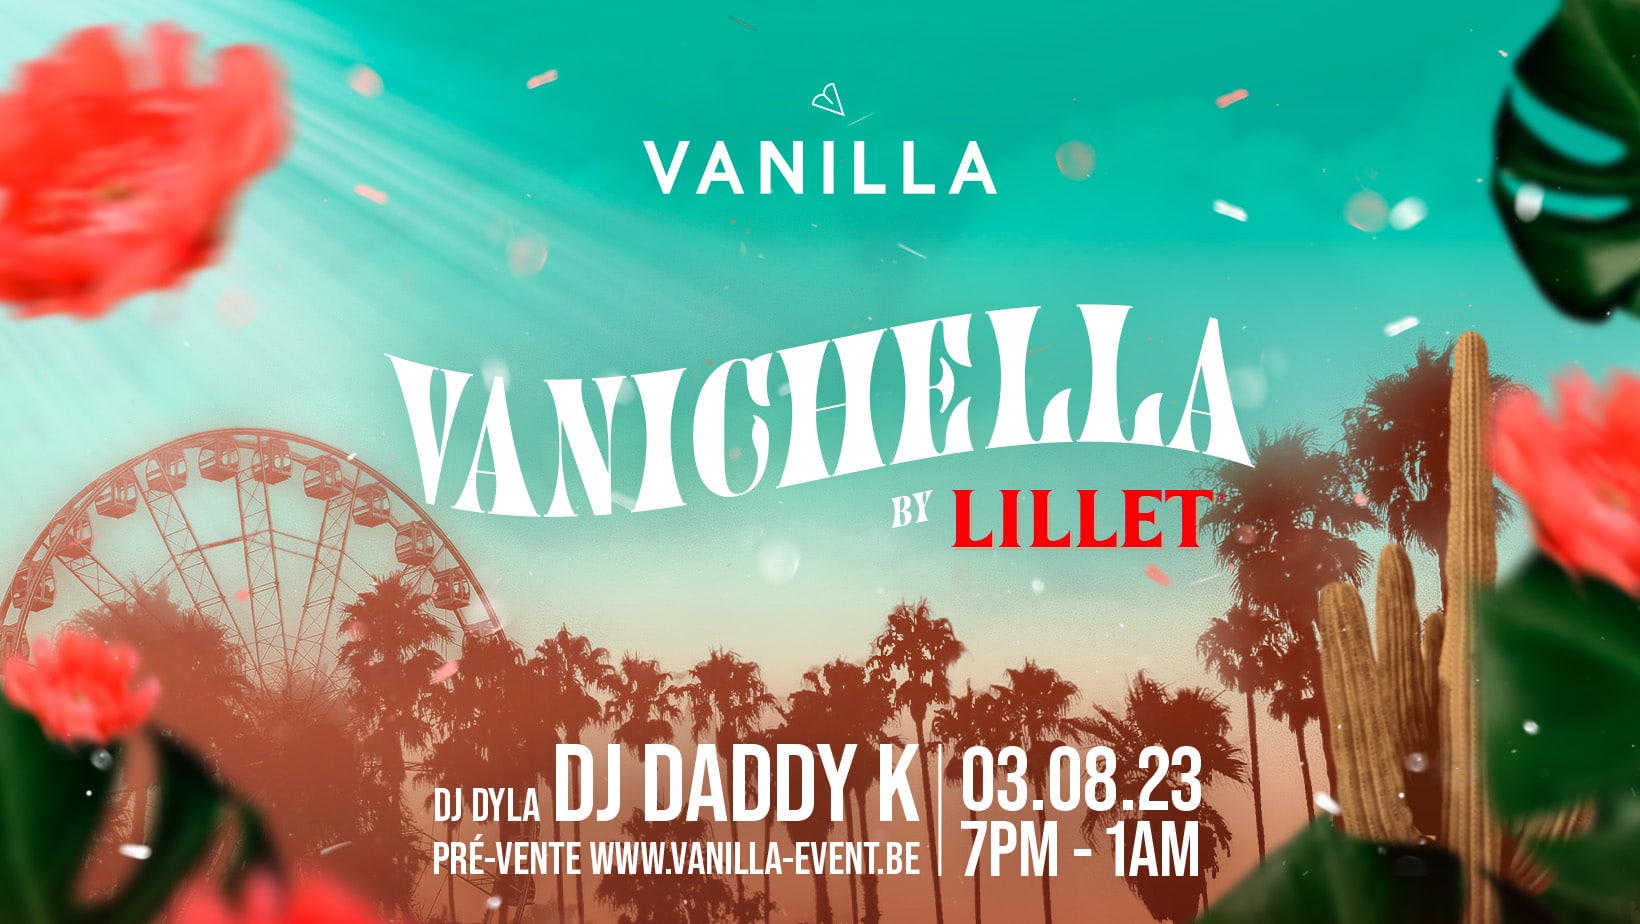 vanilla-event-samedi-Vanicella-lillet-03-08